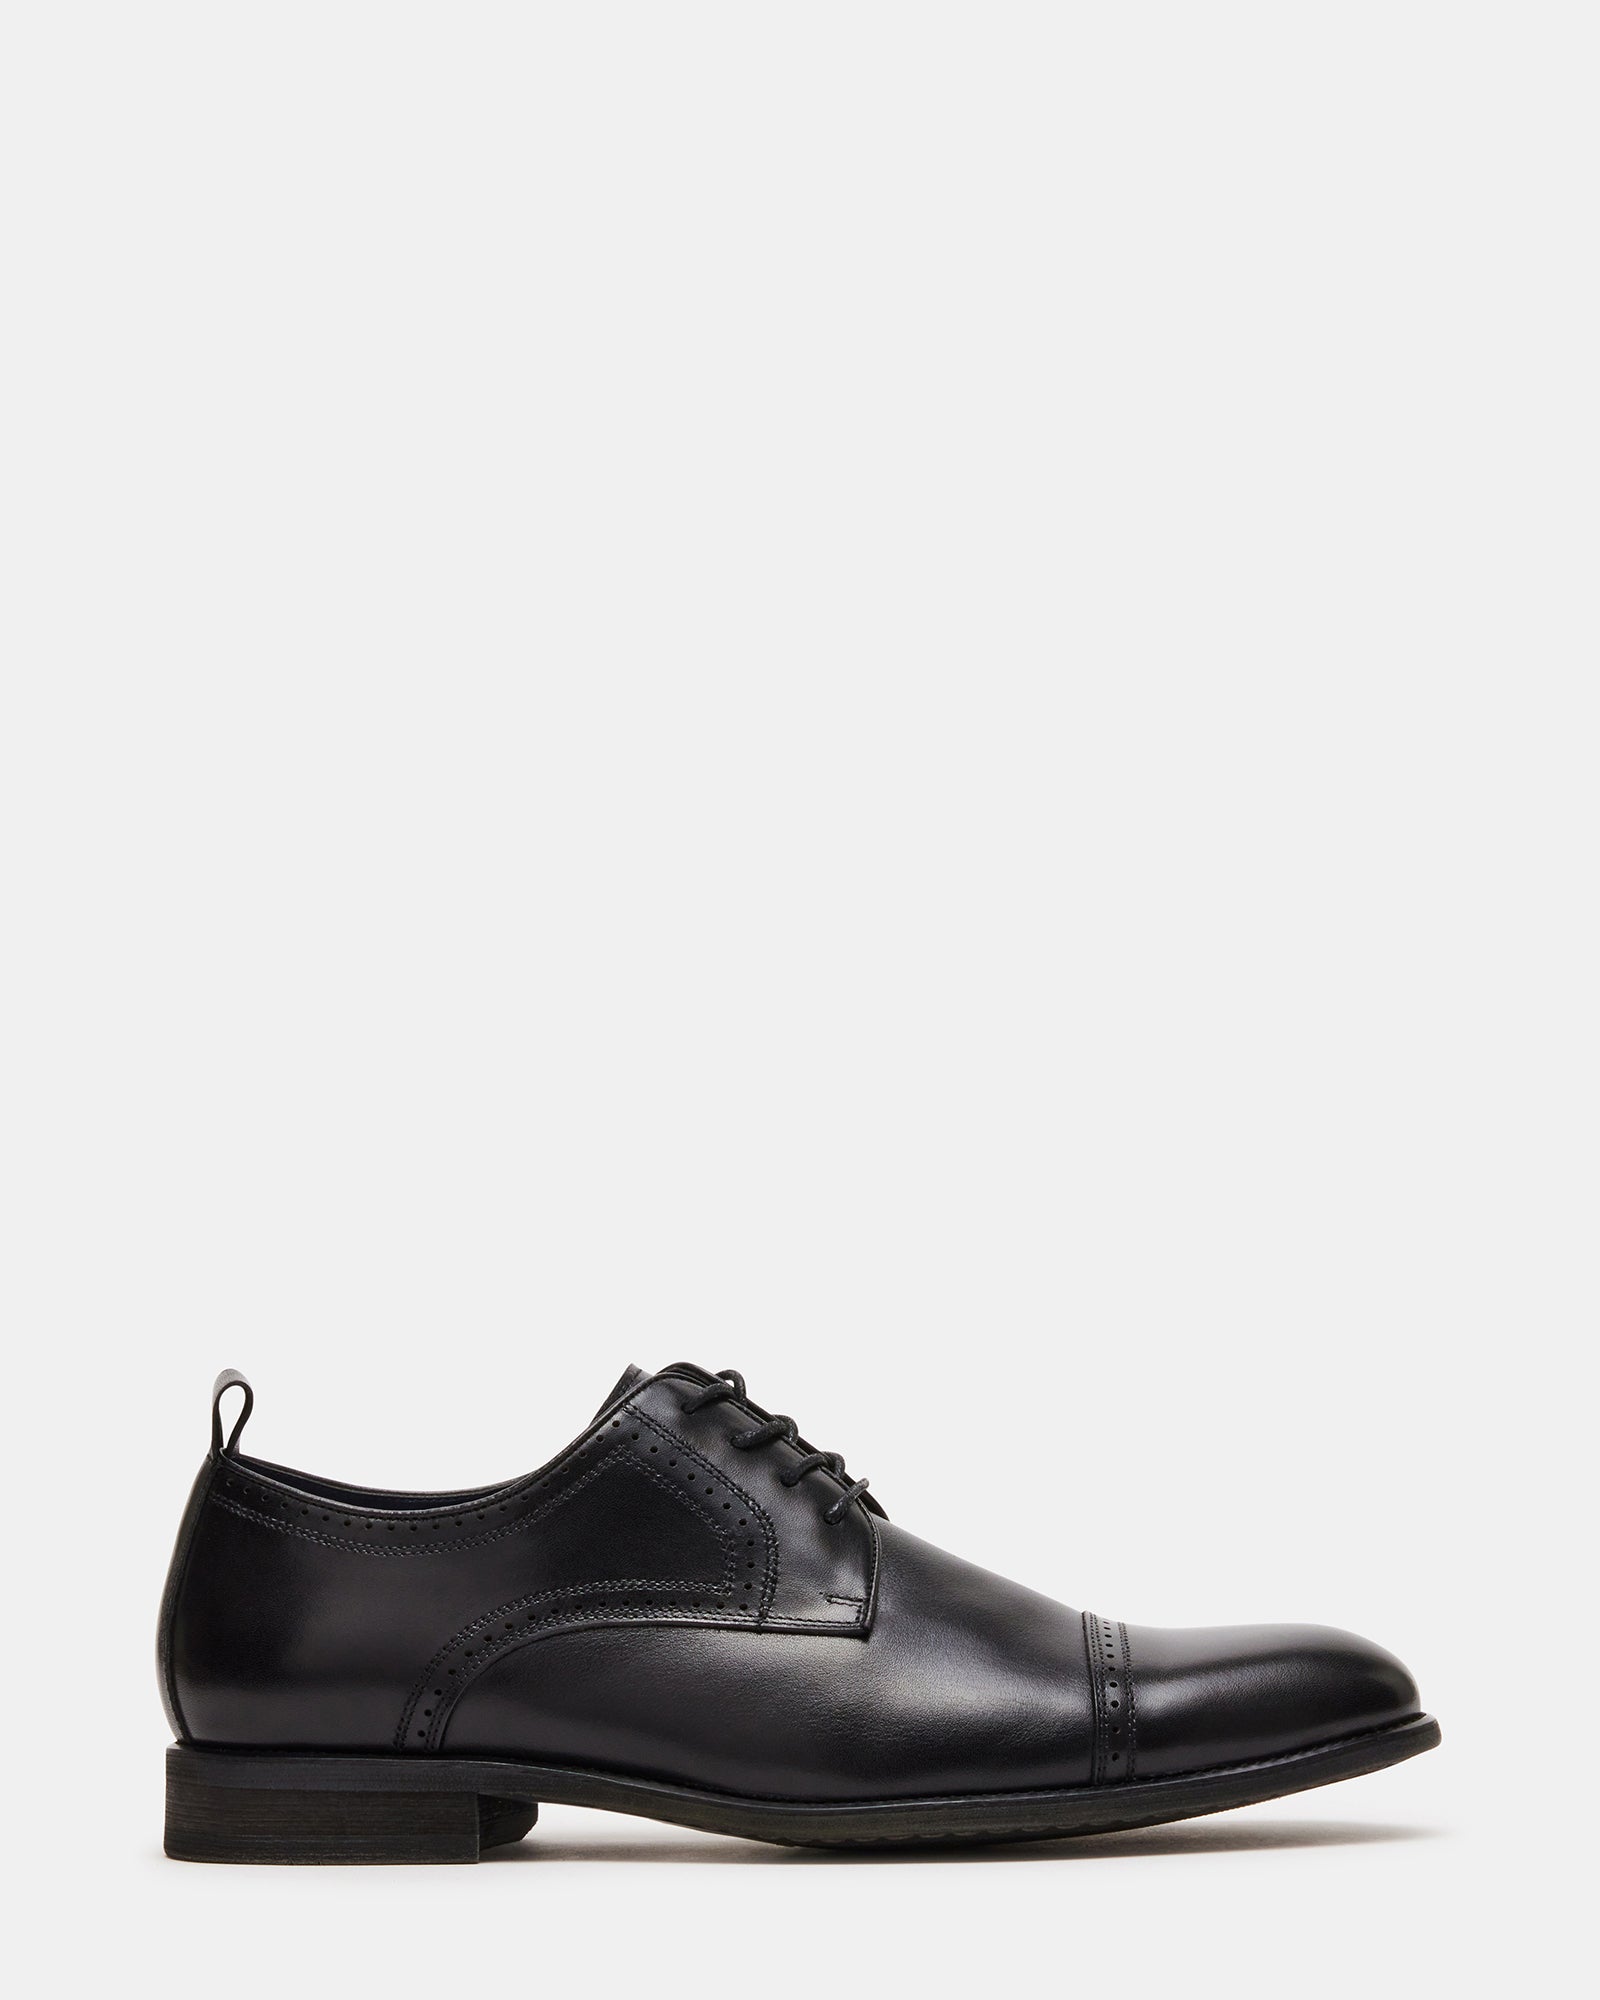 Smiths Vintage Smooth Leather Dress Shoes in Black | Dr. Martens